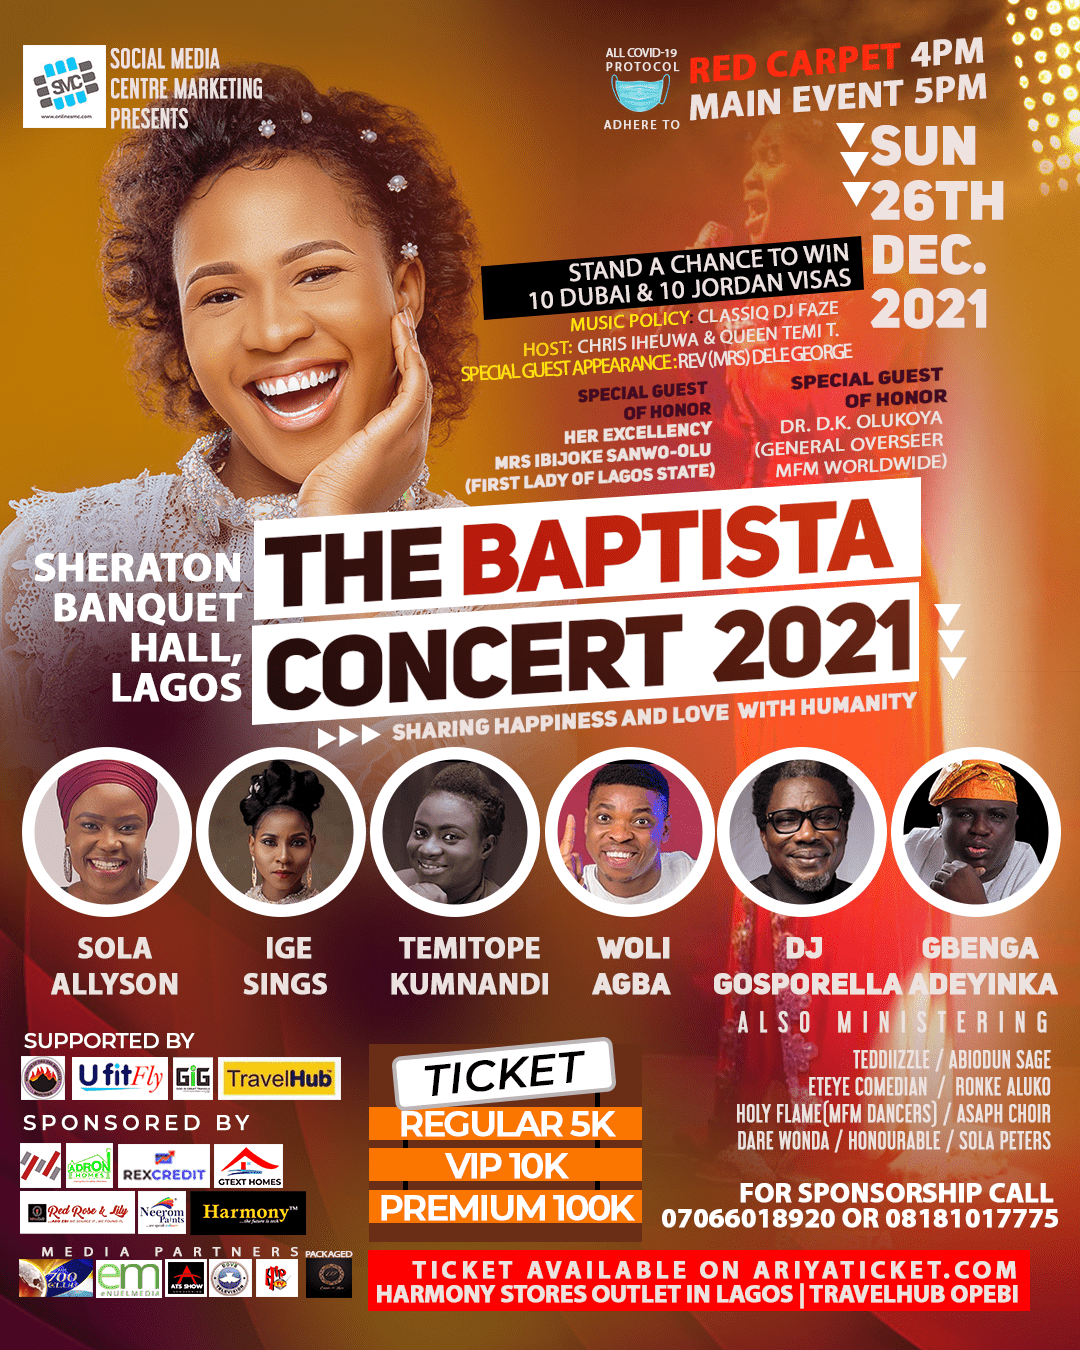 EVENT: Baptista Set To Host “The Baptista Concert” 2021